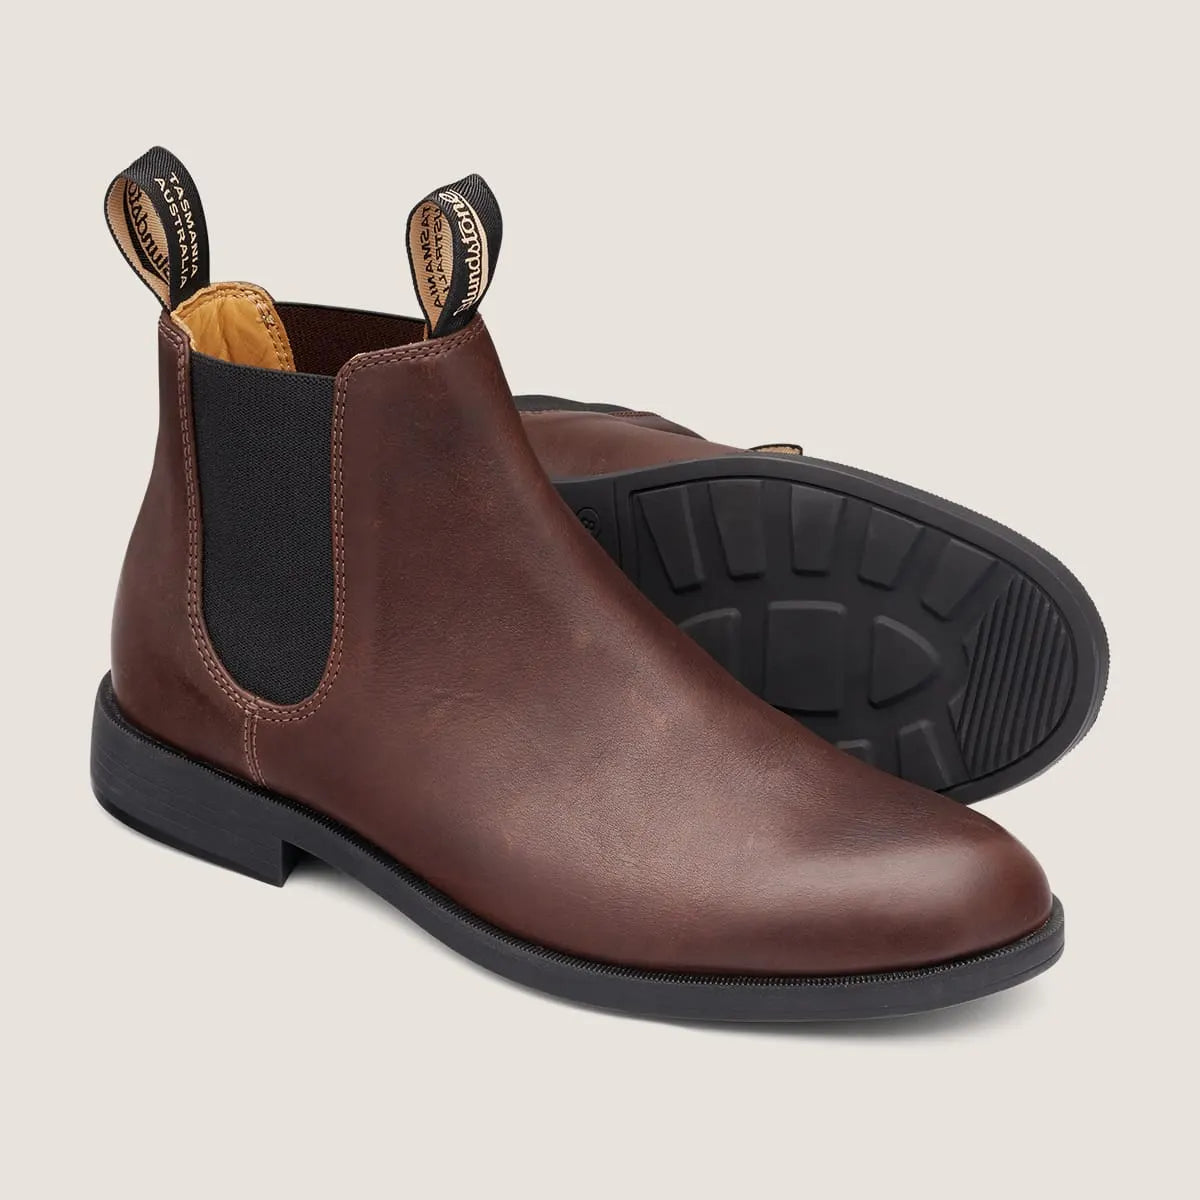 Blundstone 1900 Men's Ankle Dress Boot - Chestnut Brown